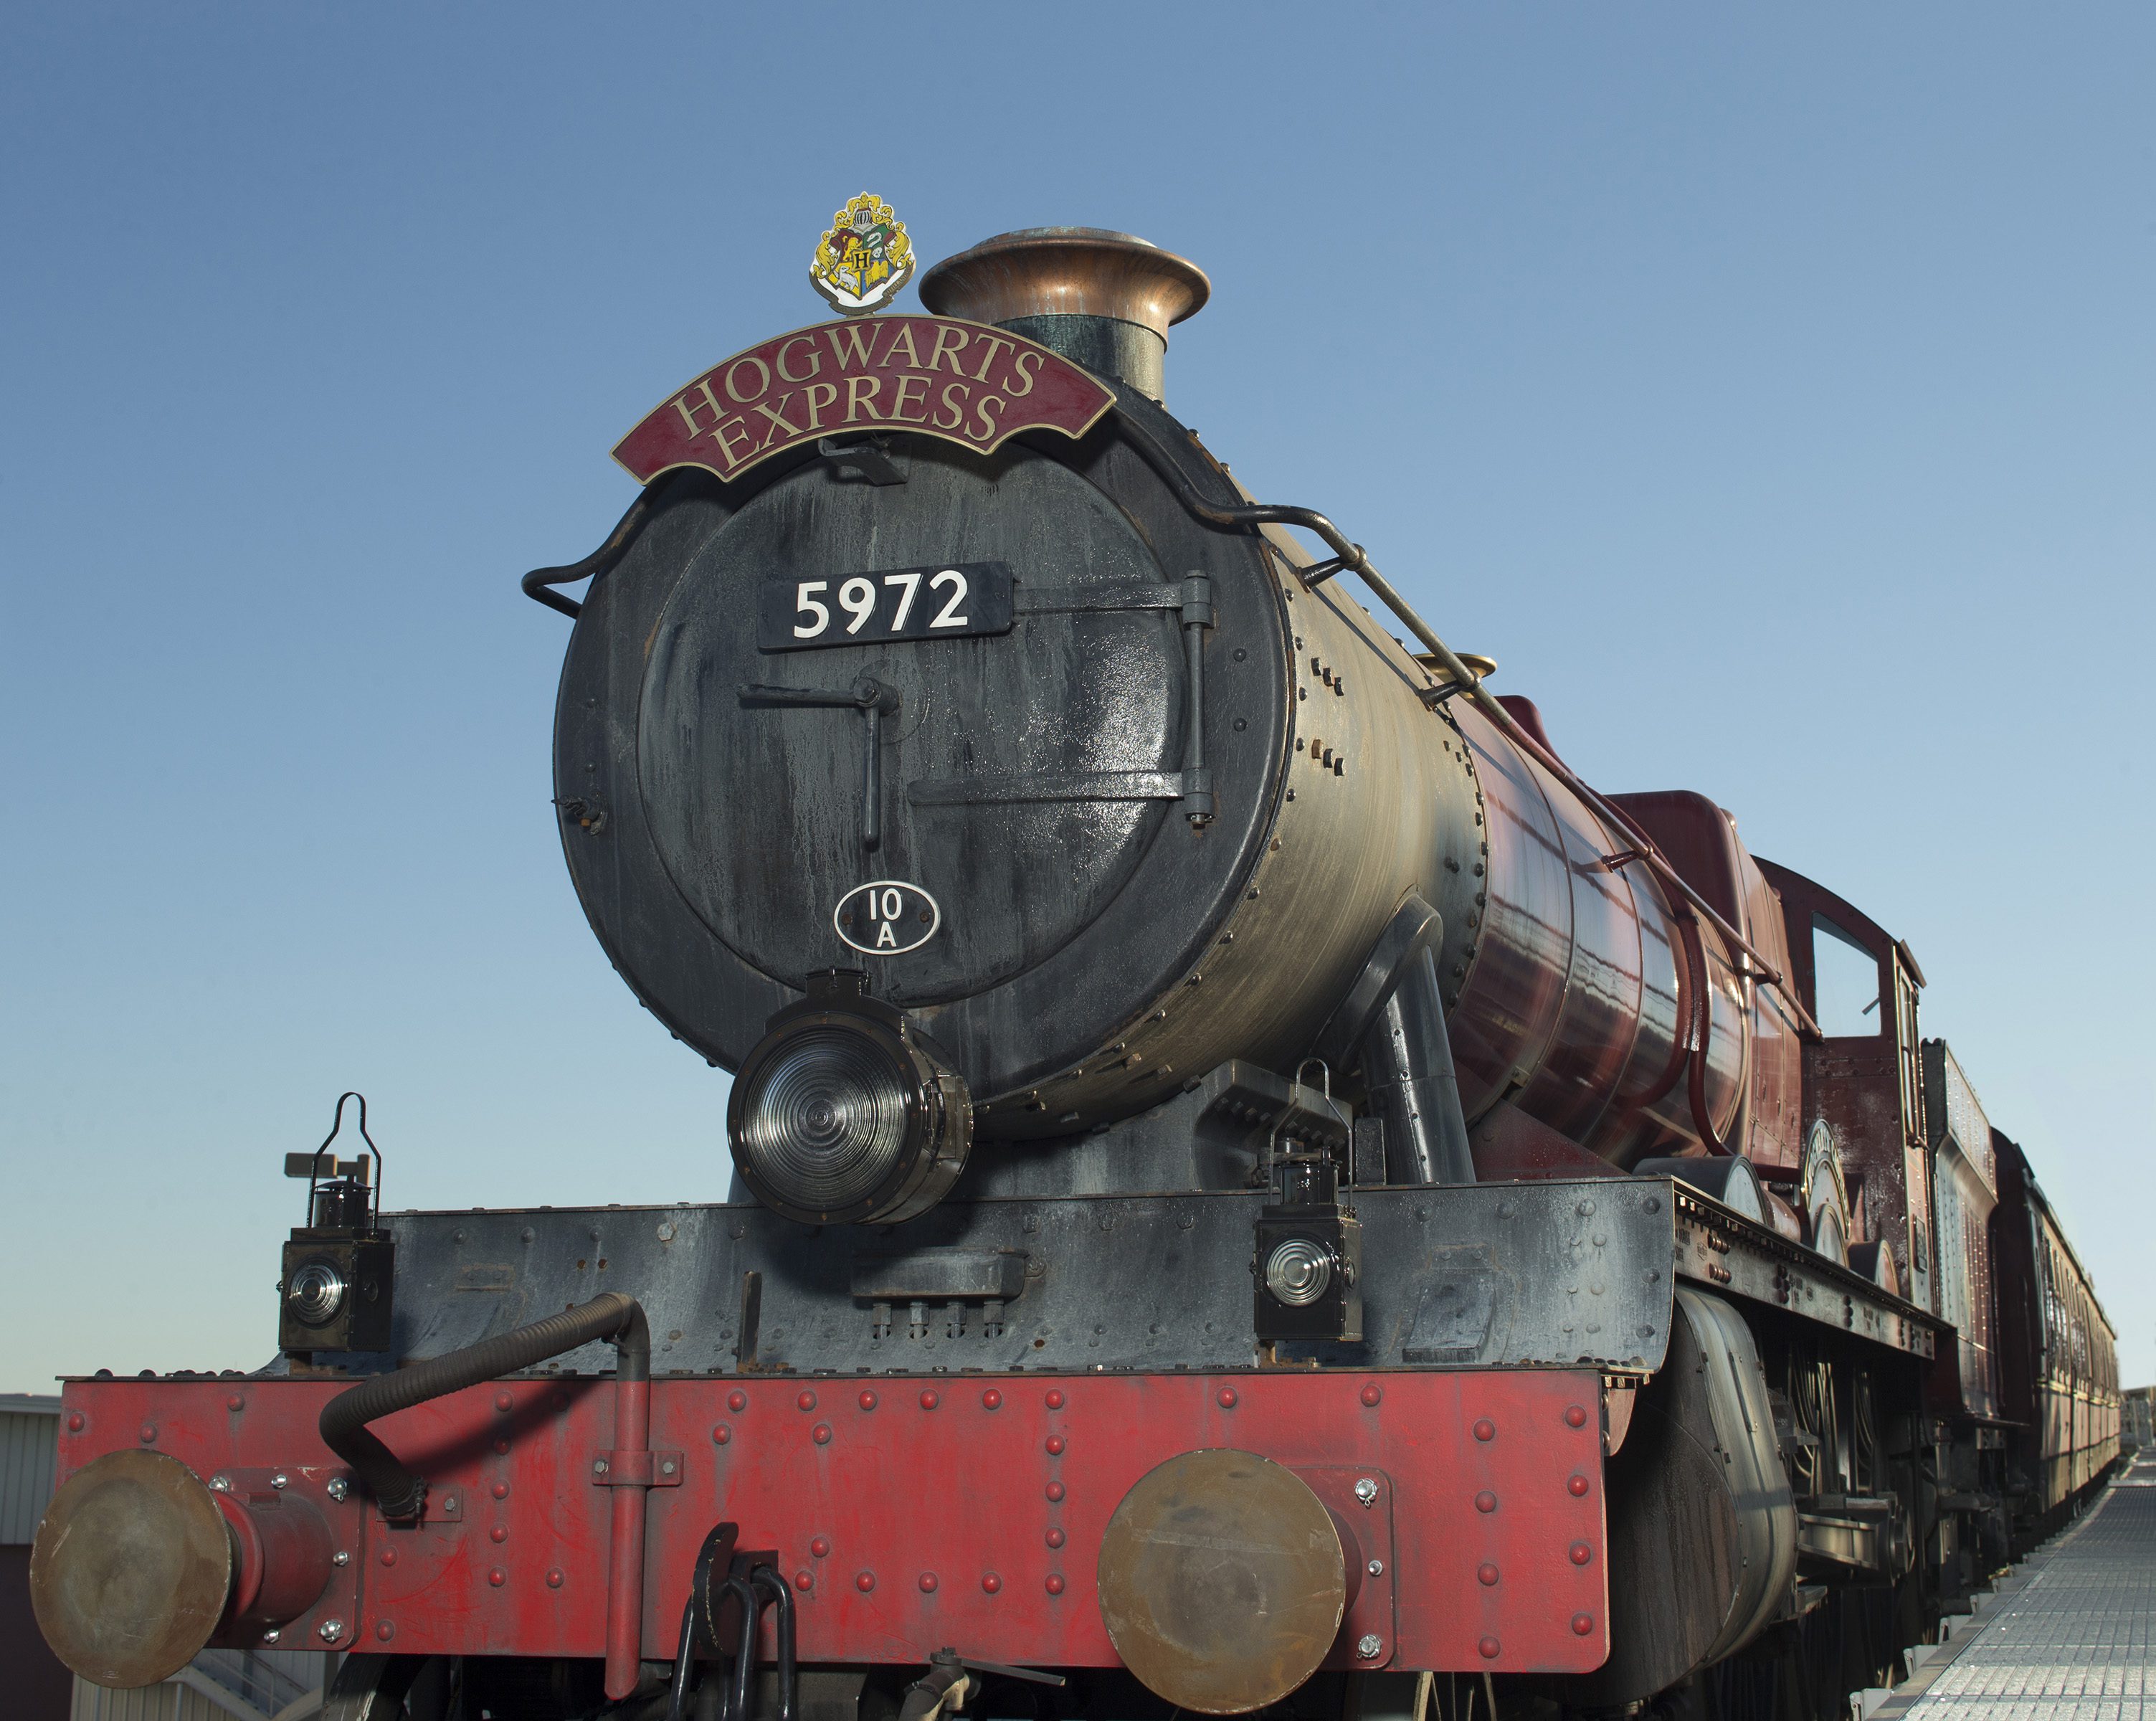 Harry Potter Hogwarts Express Train Ride at Universal Orlando Resort this summer